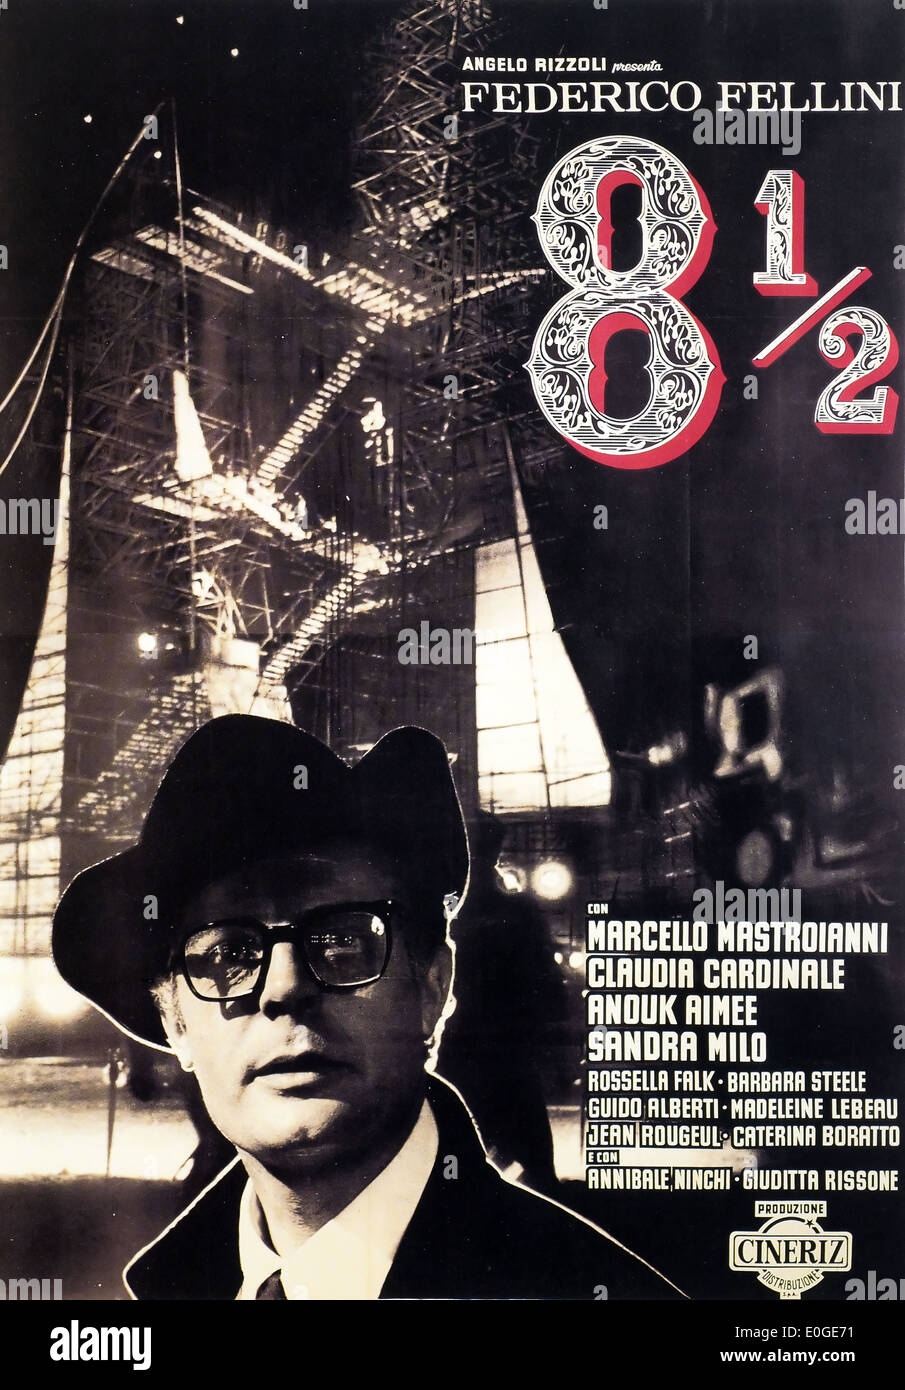 8 1/2 - Frederico Fellini - Original italienischen Film-Poster Stockfoto